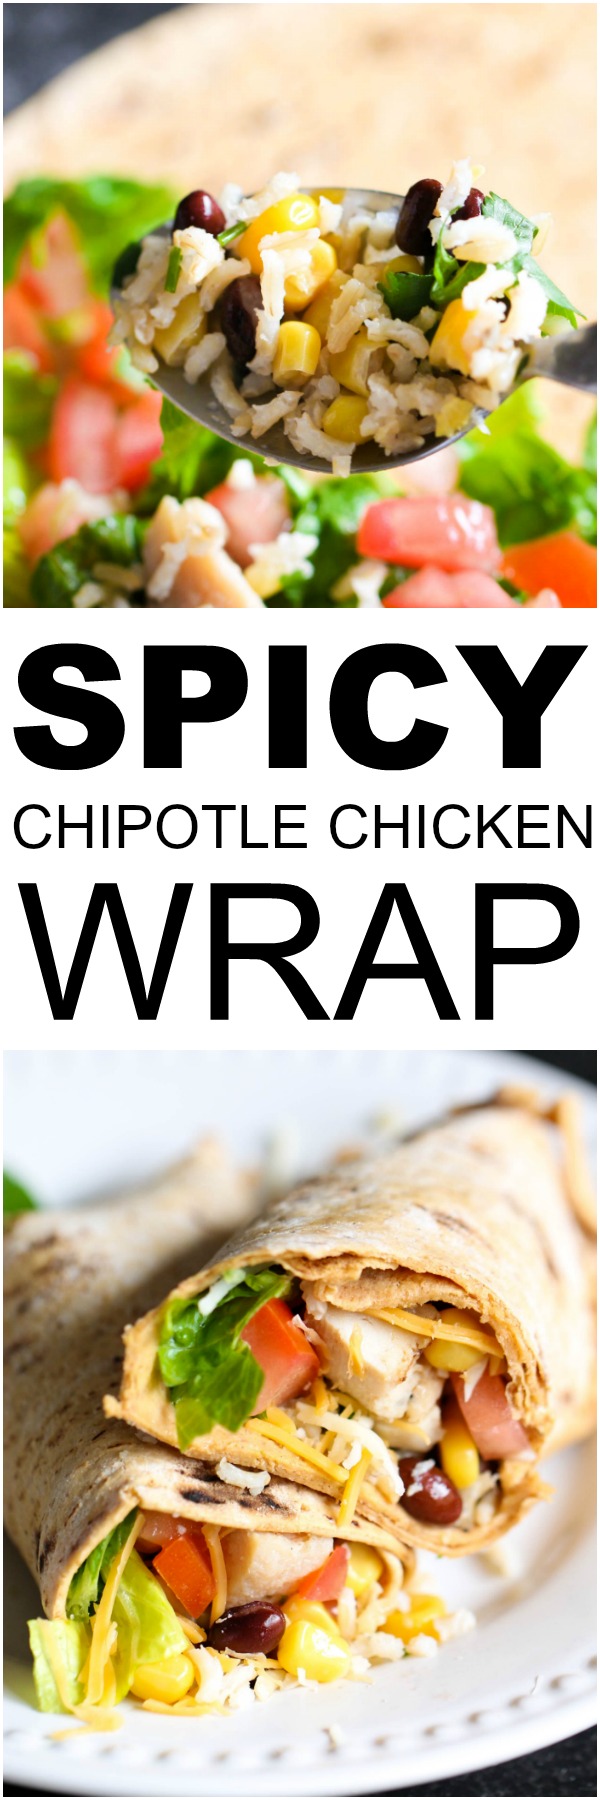 Spicy Chipotle Chicken Wrap